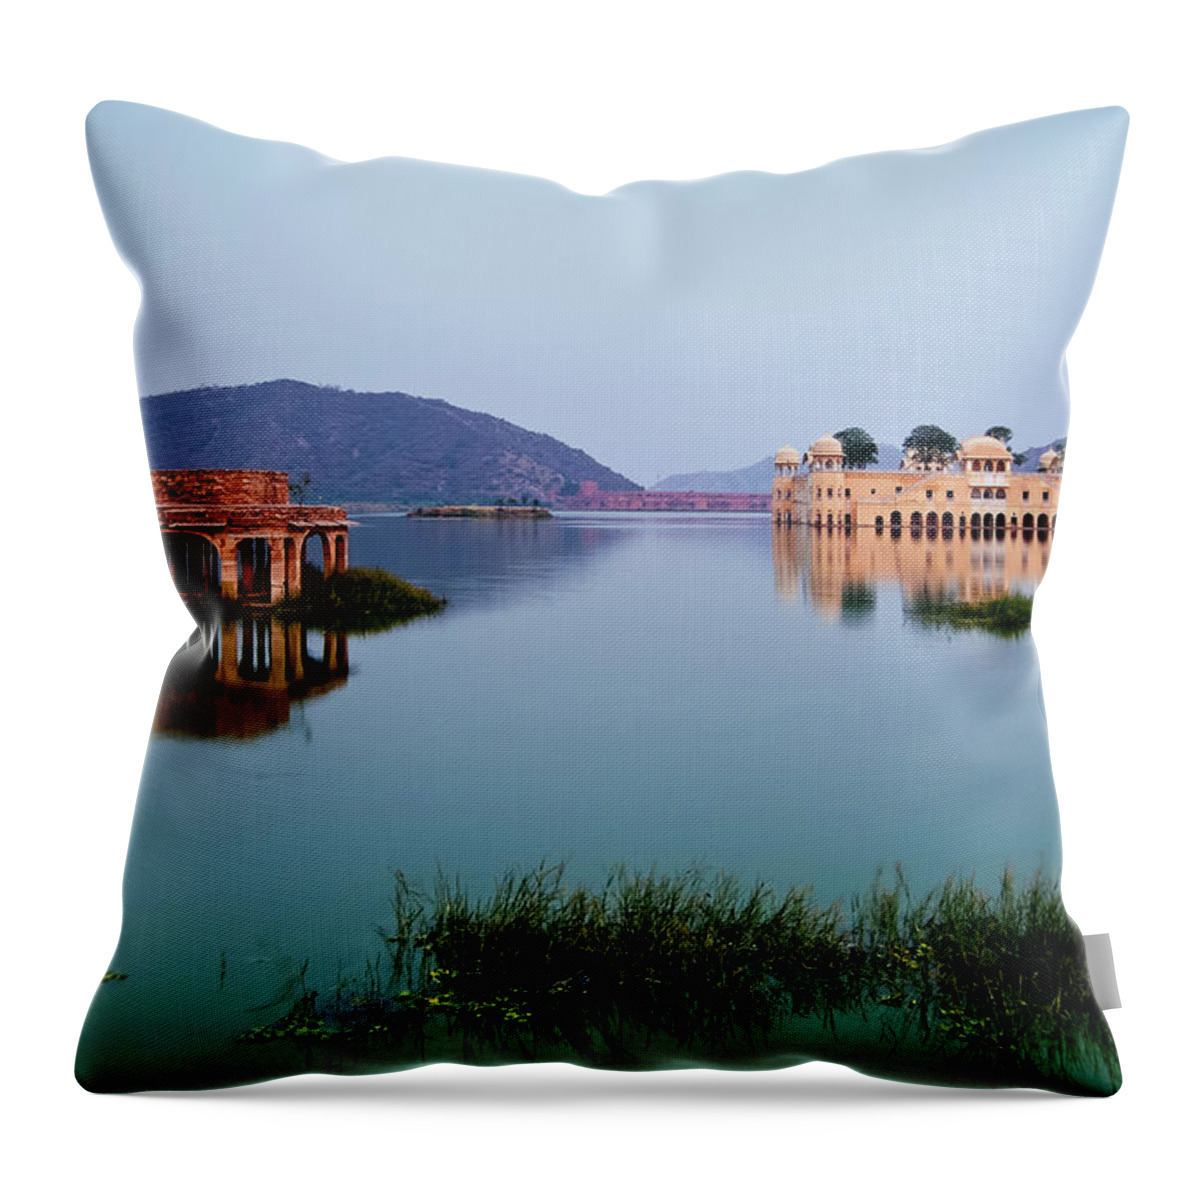 Tranquility Throw Pillow featuring the photograph Jal Mahal by Subir Basak